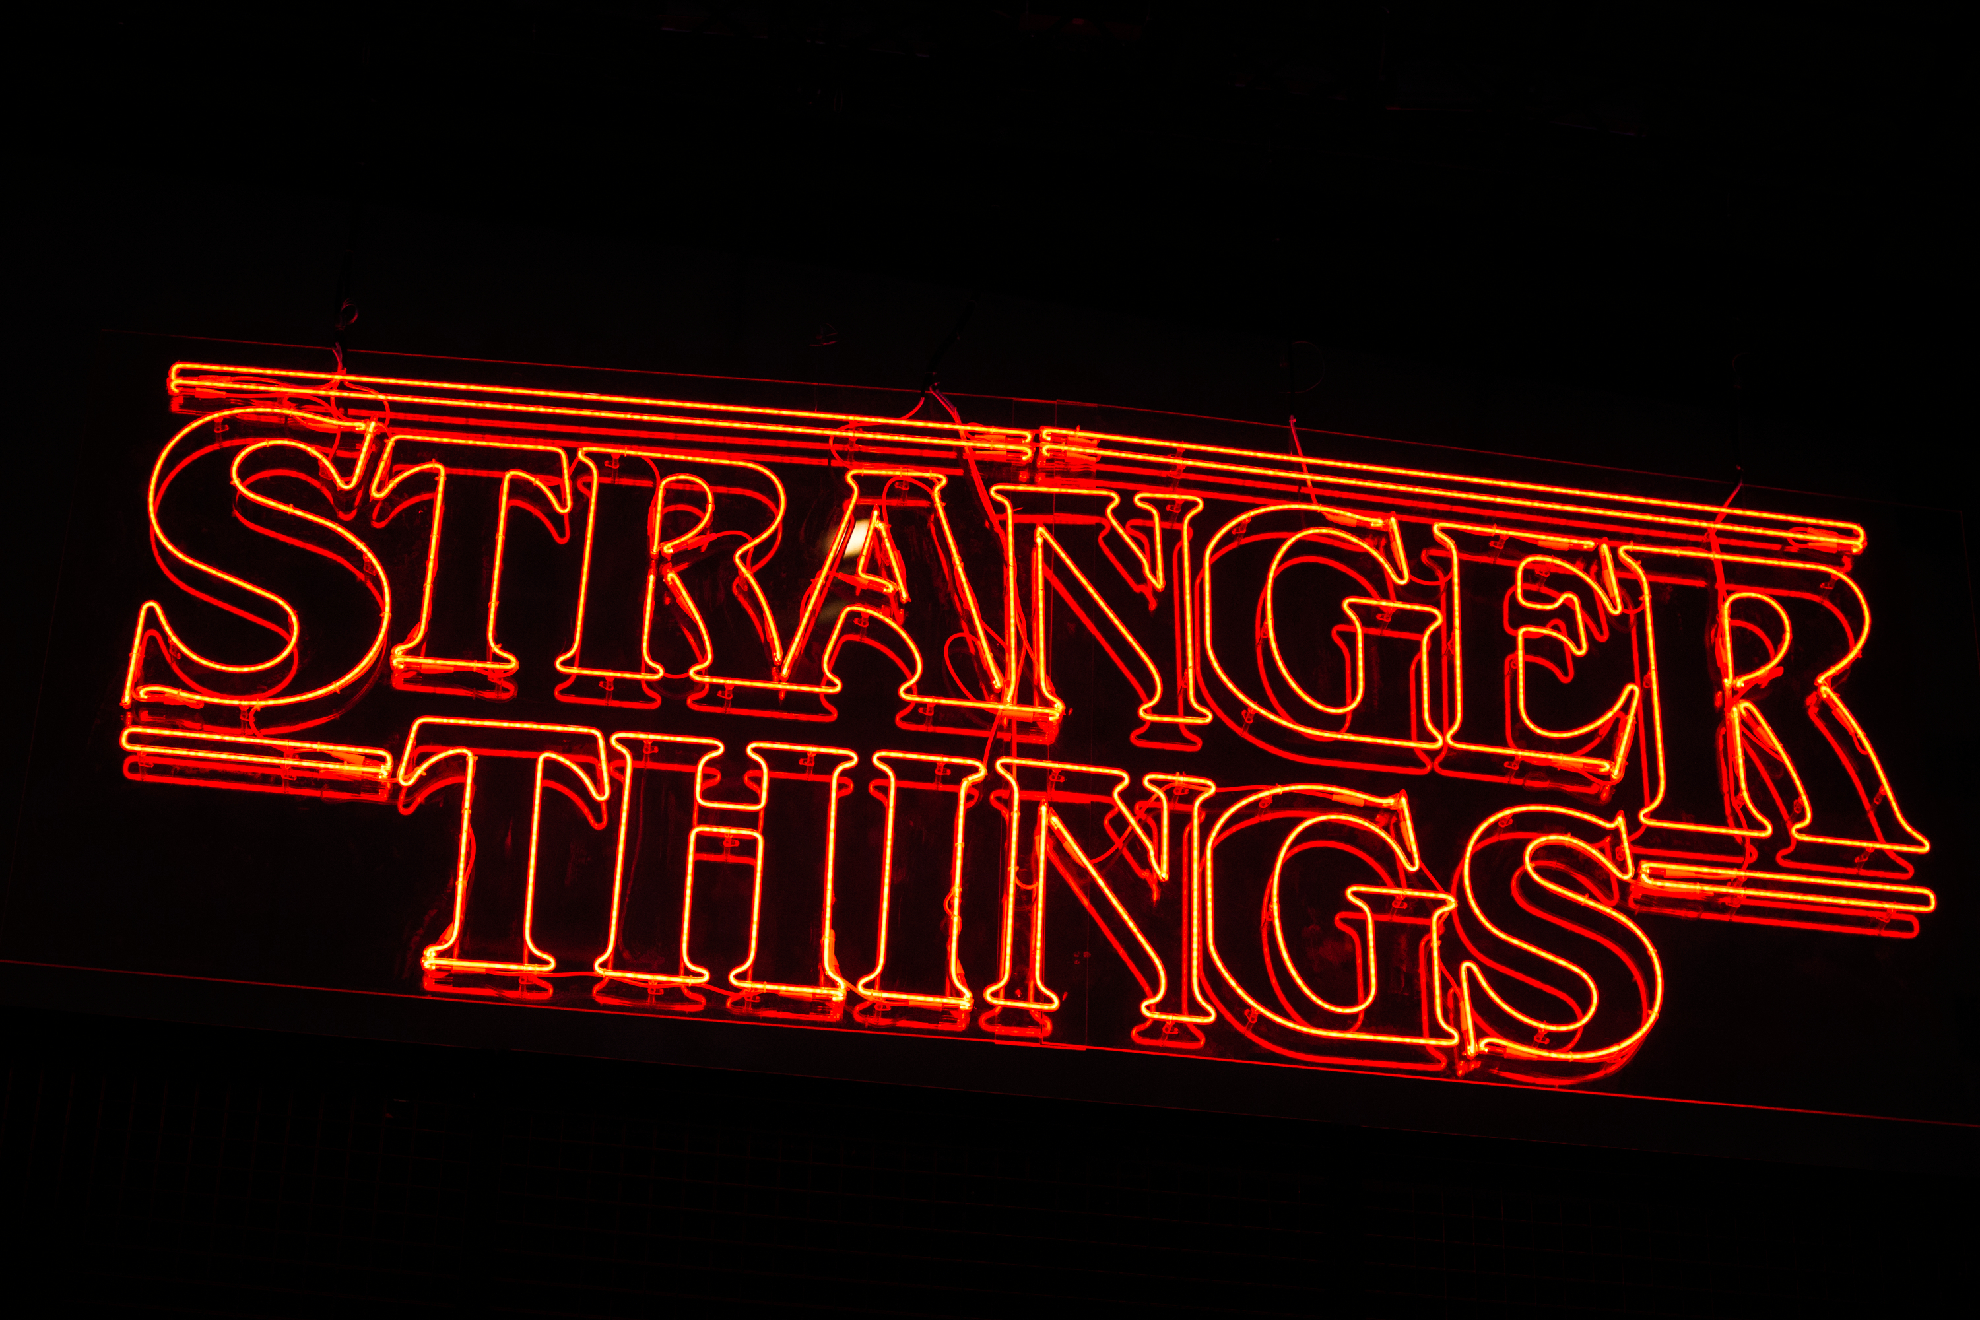 Así será la quinta temporada de 'Stranger things' de Netflix - Grupo Milenio